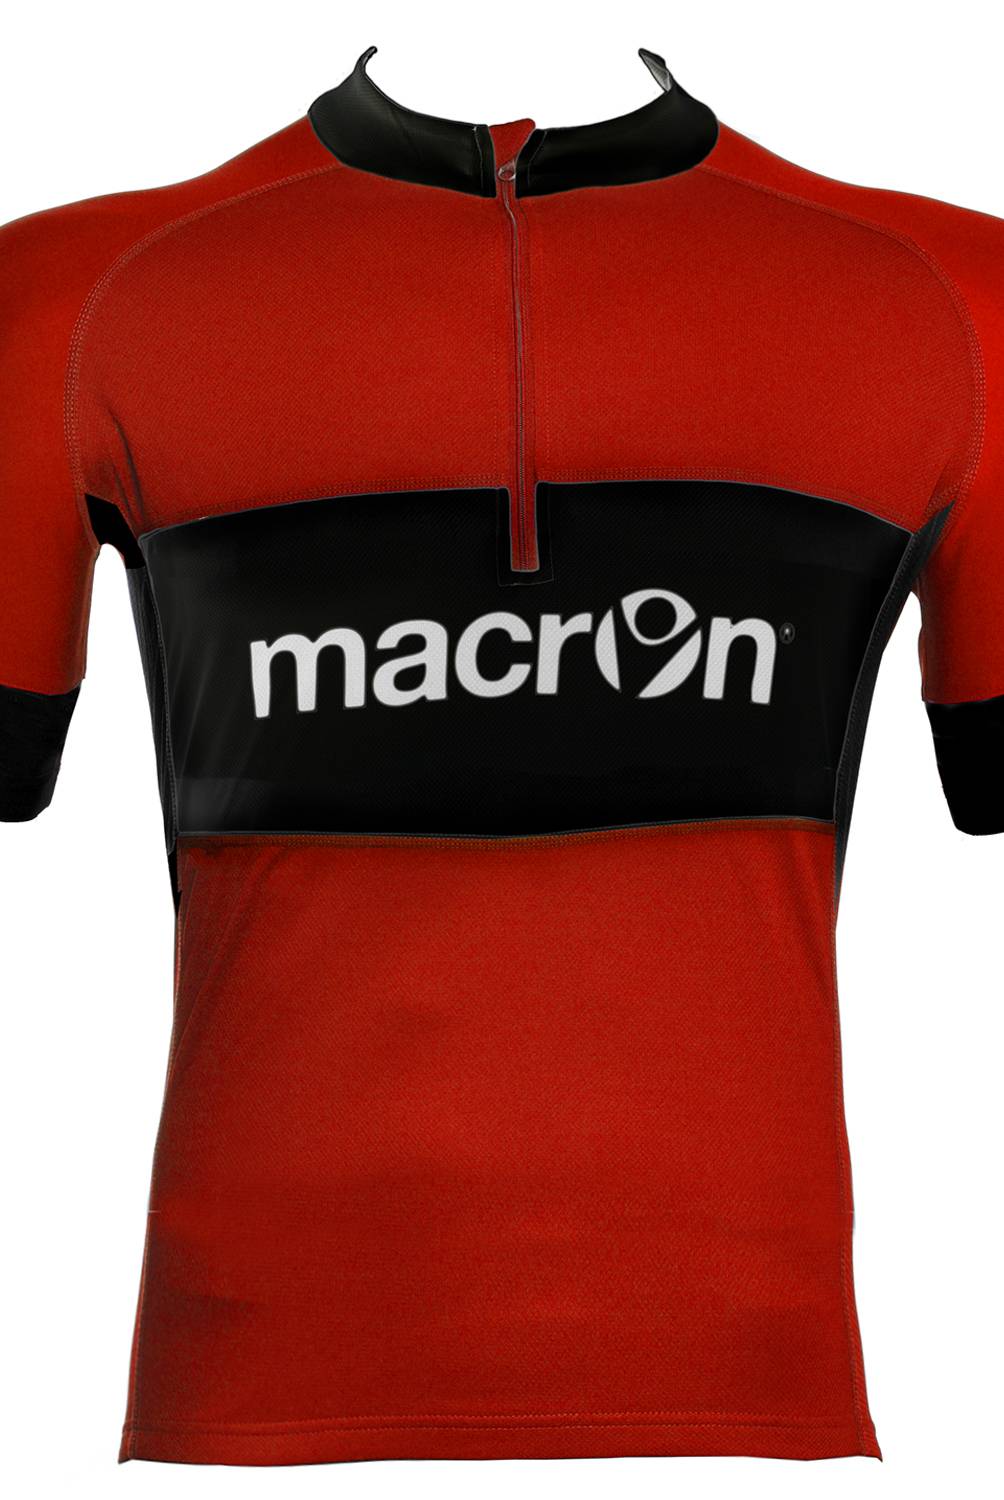 MACRON - Macron Tricota Ciclismo Hombre